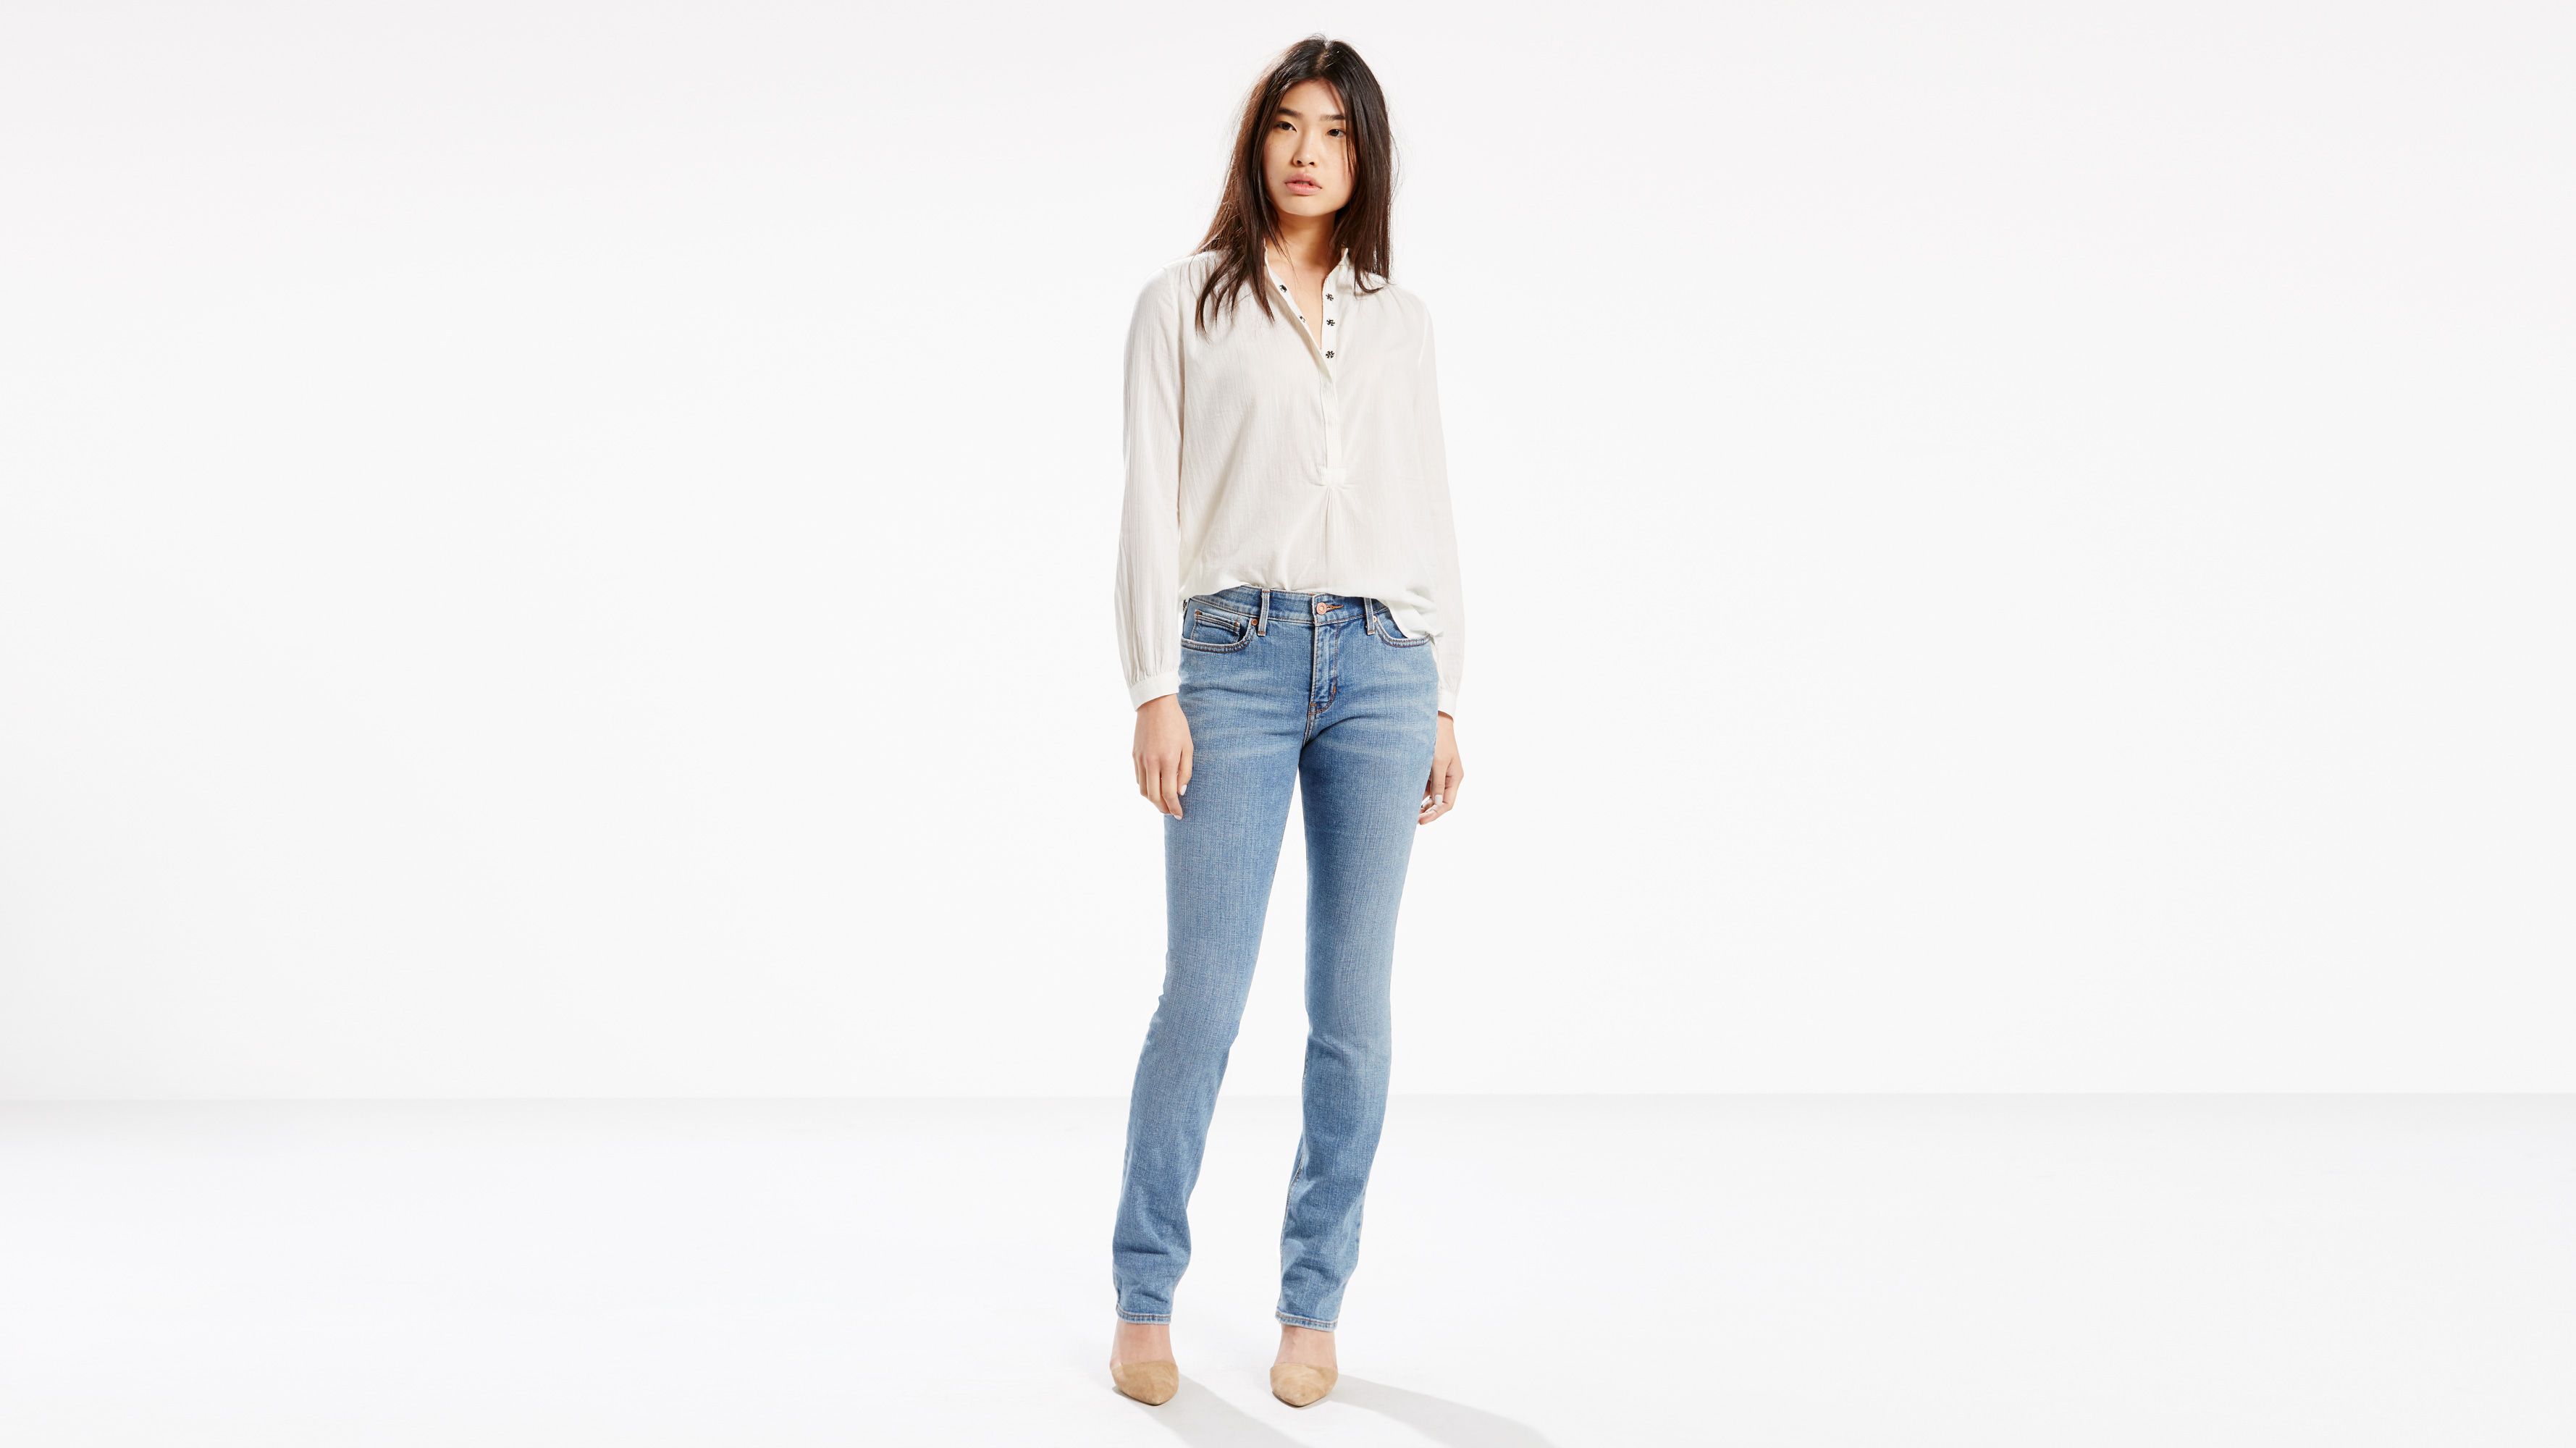 525™ Hidden Elastic Waist Jeans for Women | Levi's®